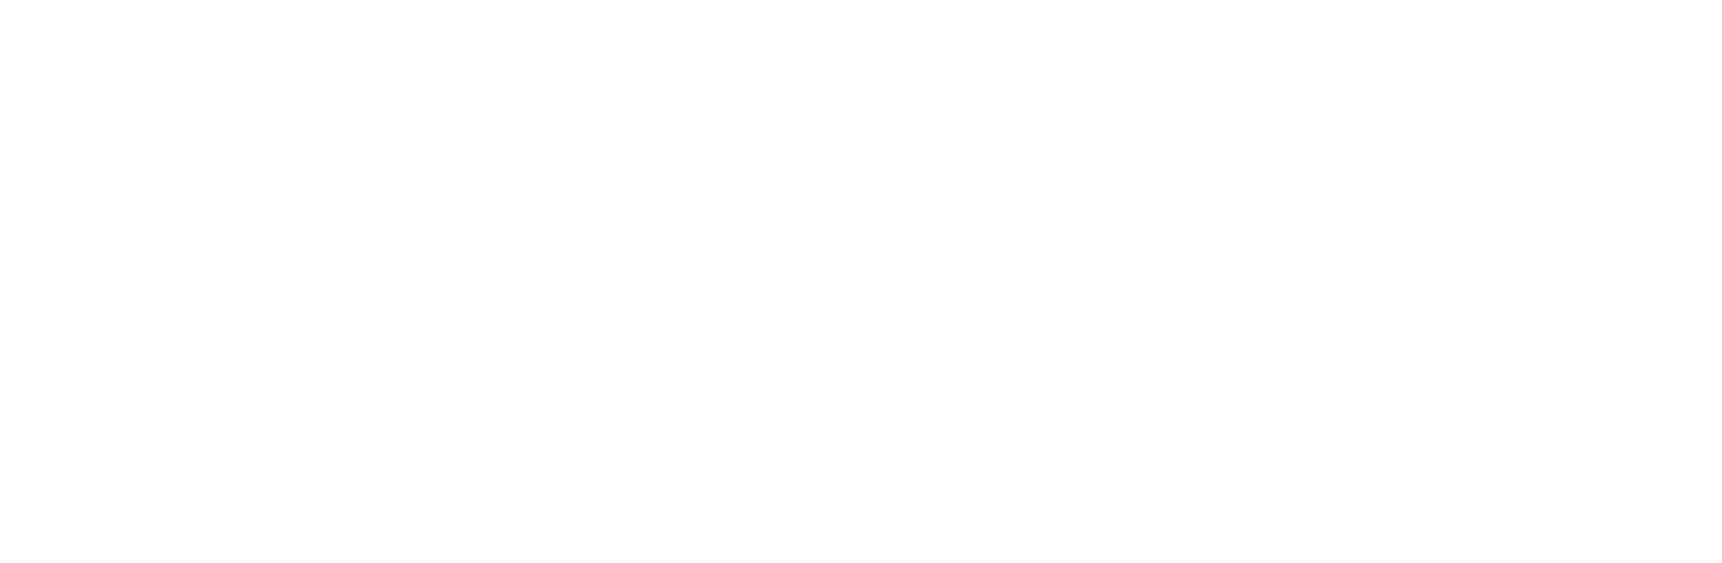 Leanbooks